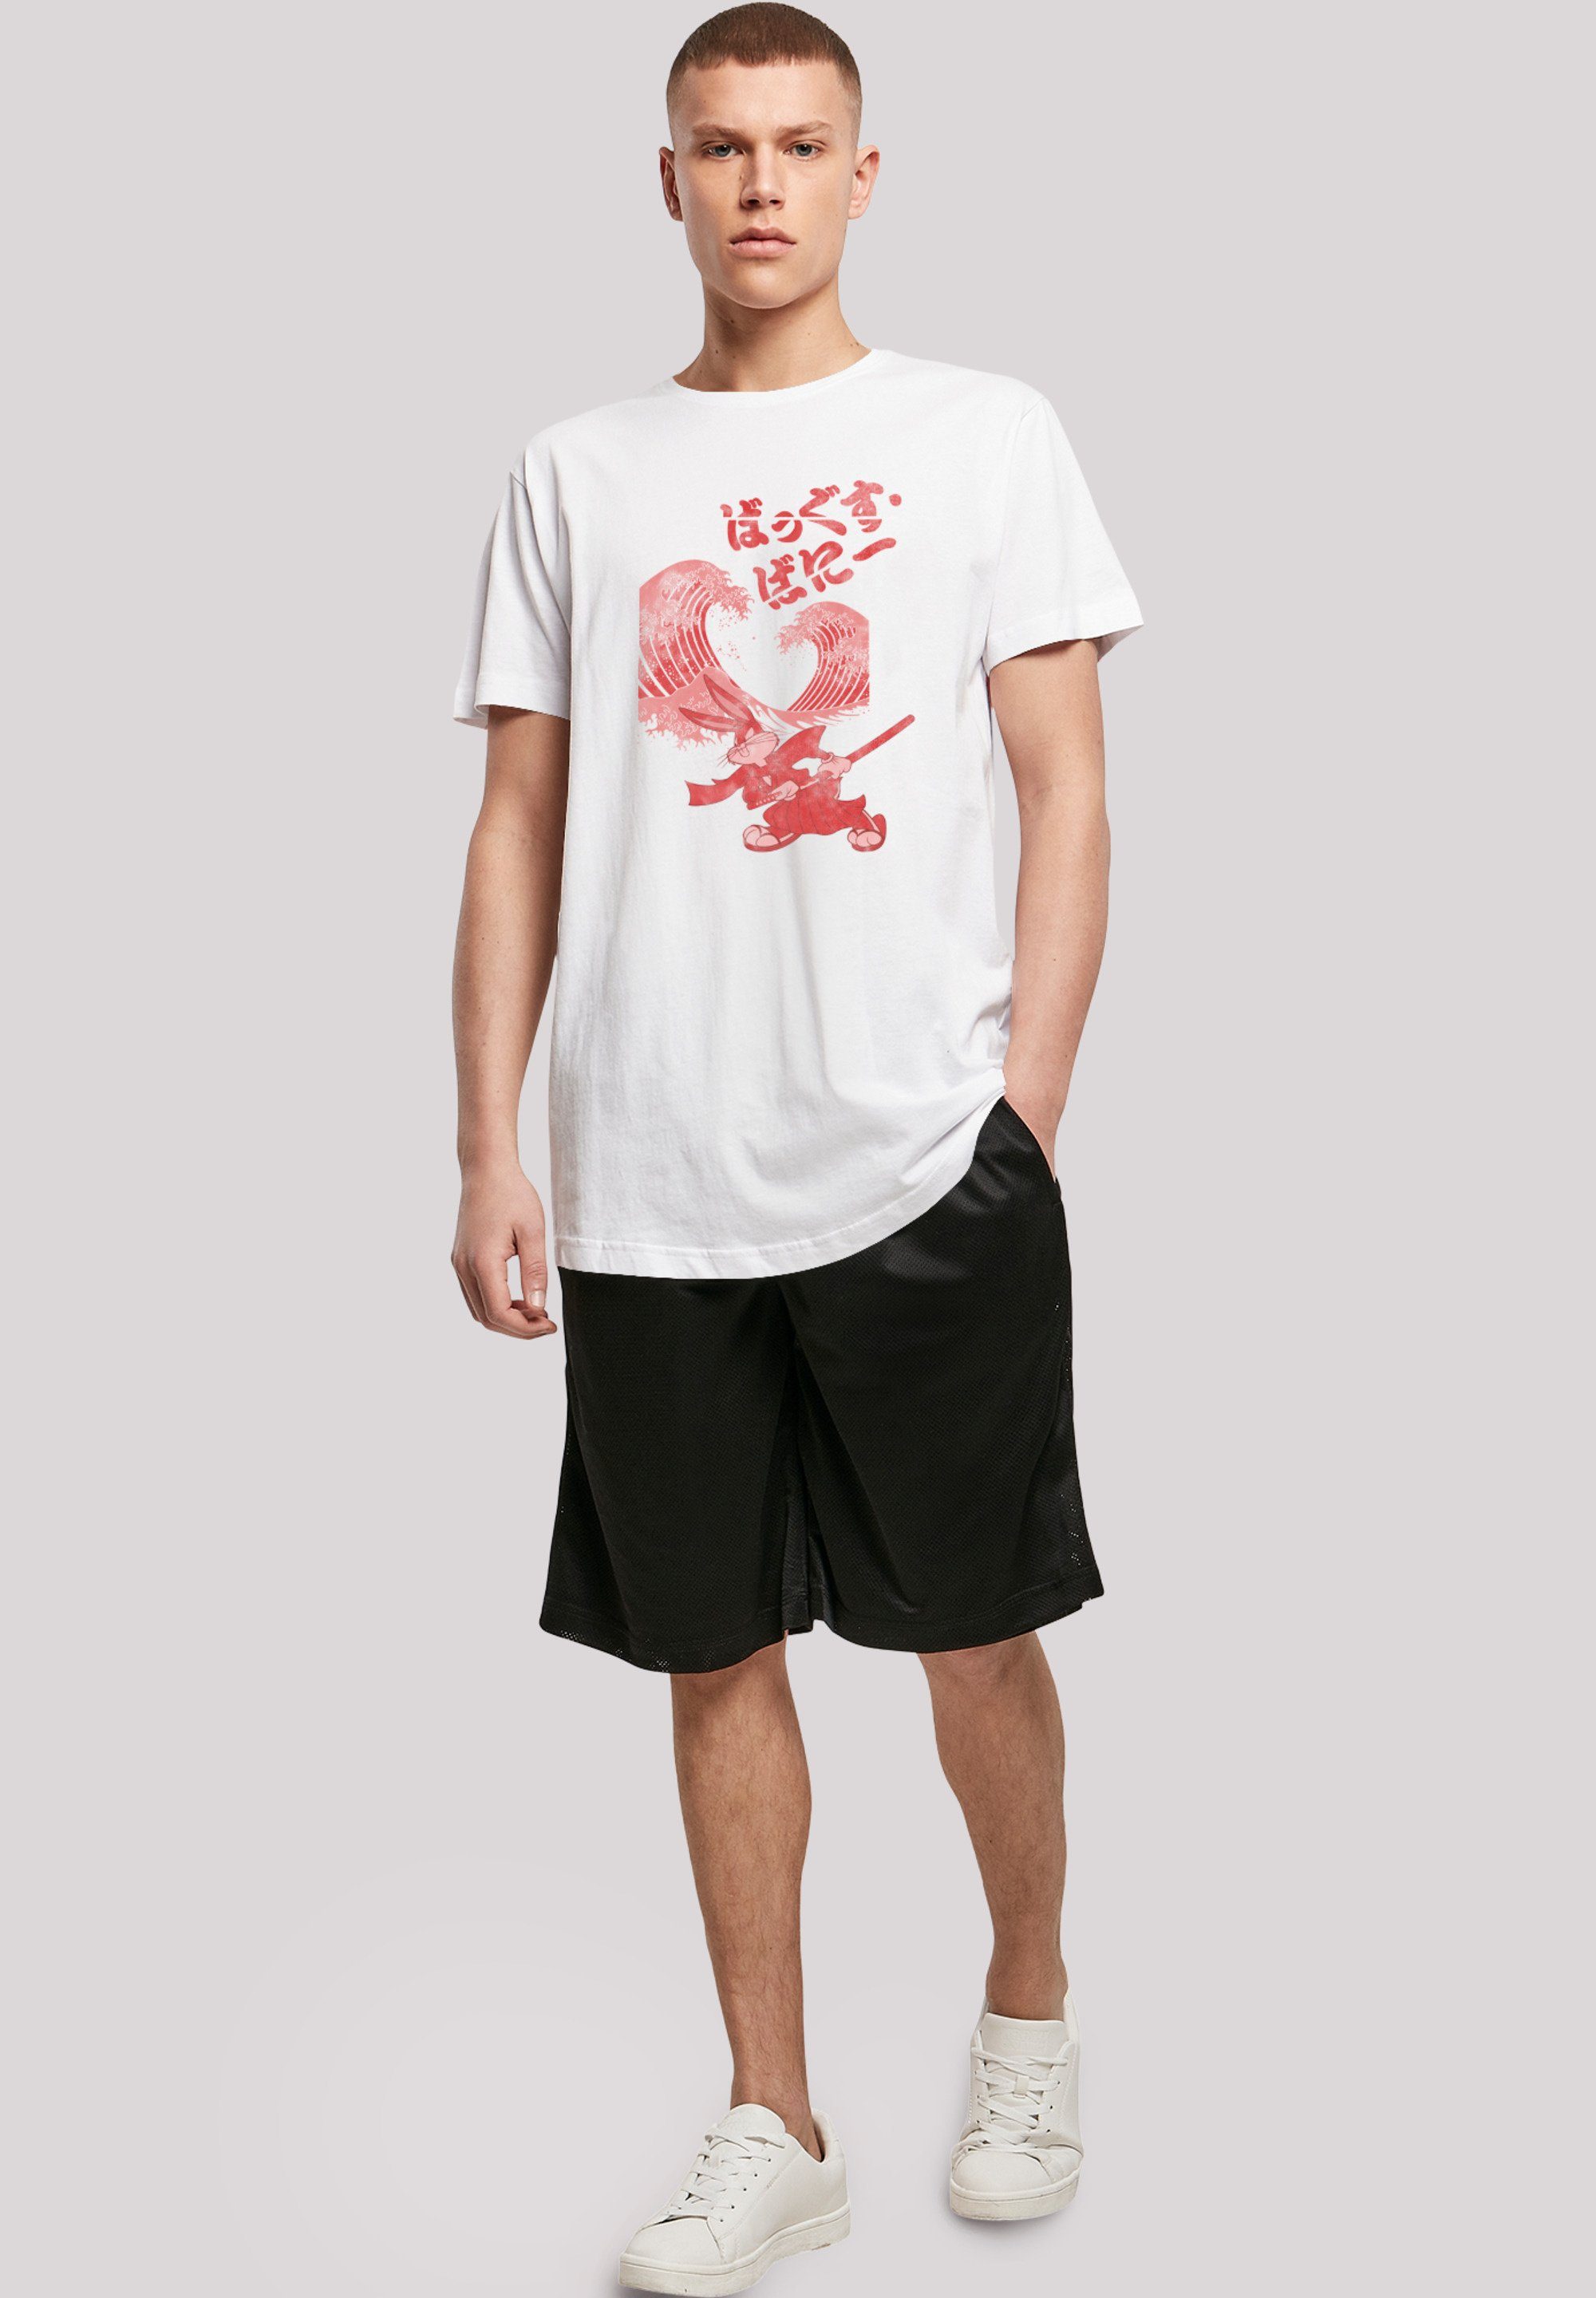 T-Shirt Bugs Shogun' Print Bunny F4NT4STIC Looney weiß Tunes